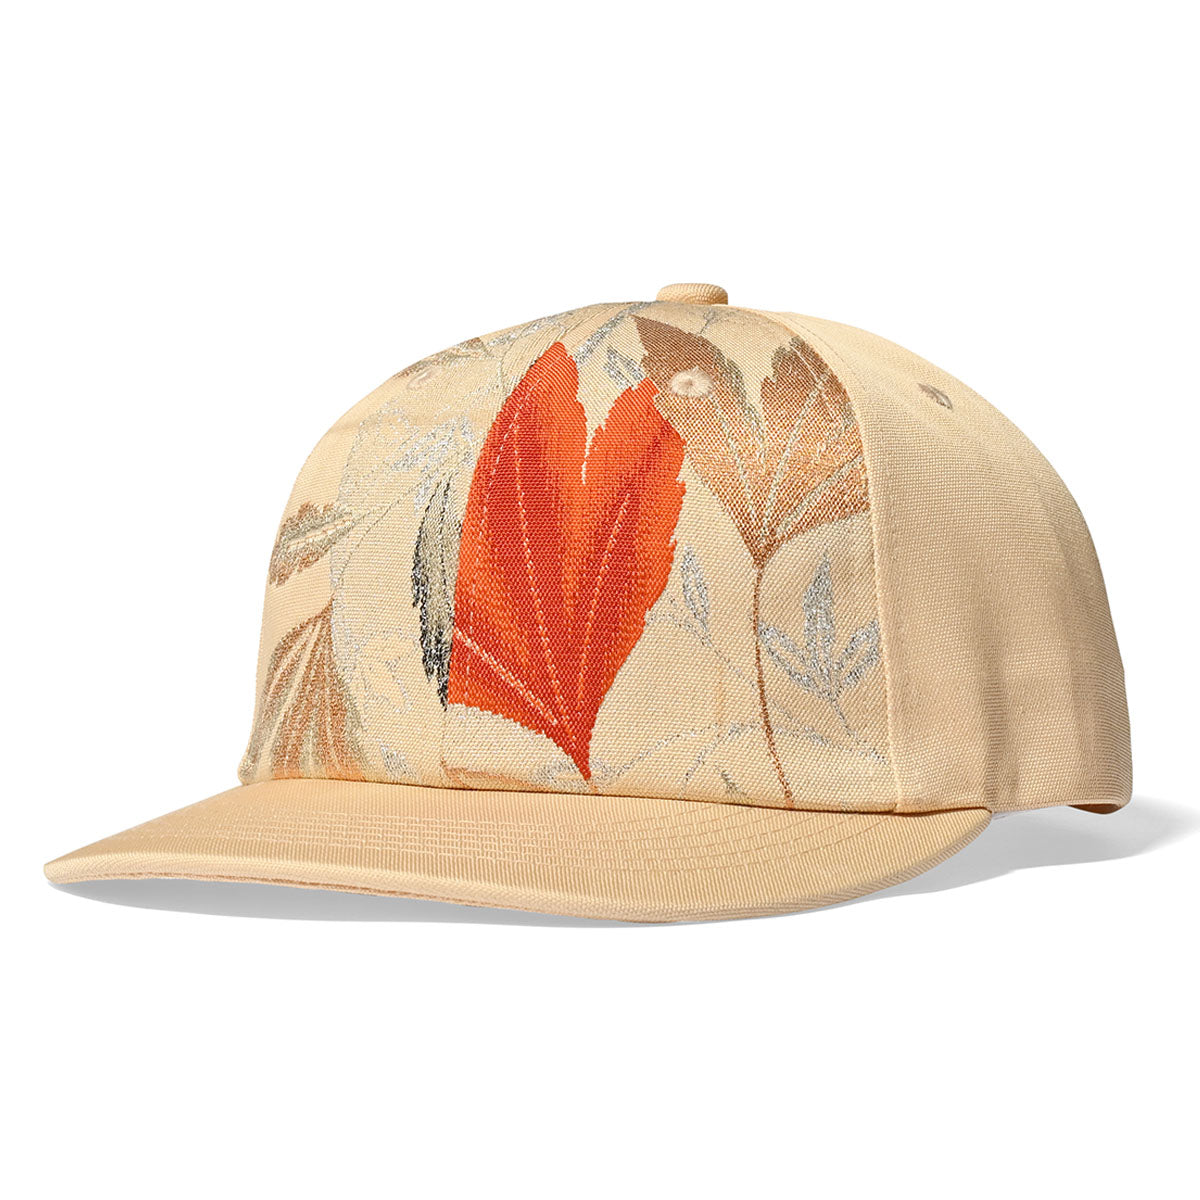 HOMEGAME - 18 型和服傳統日本布料老爹帽